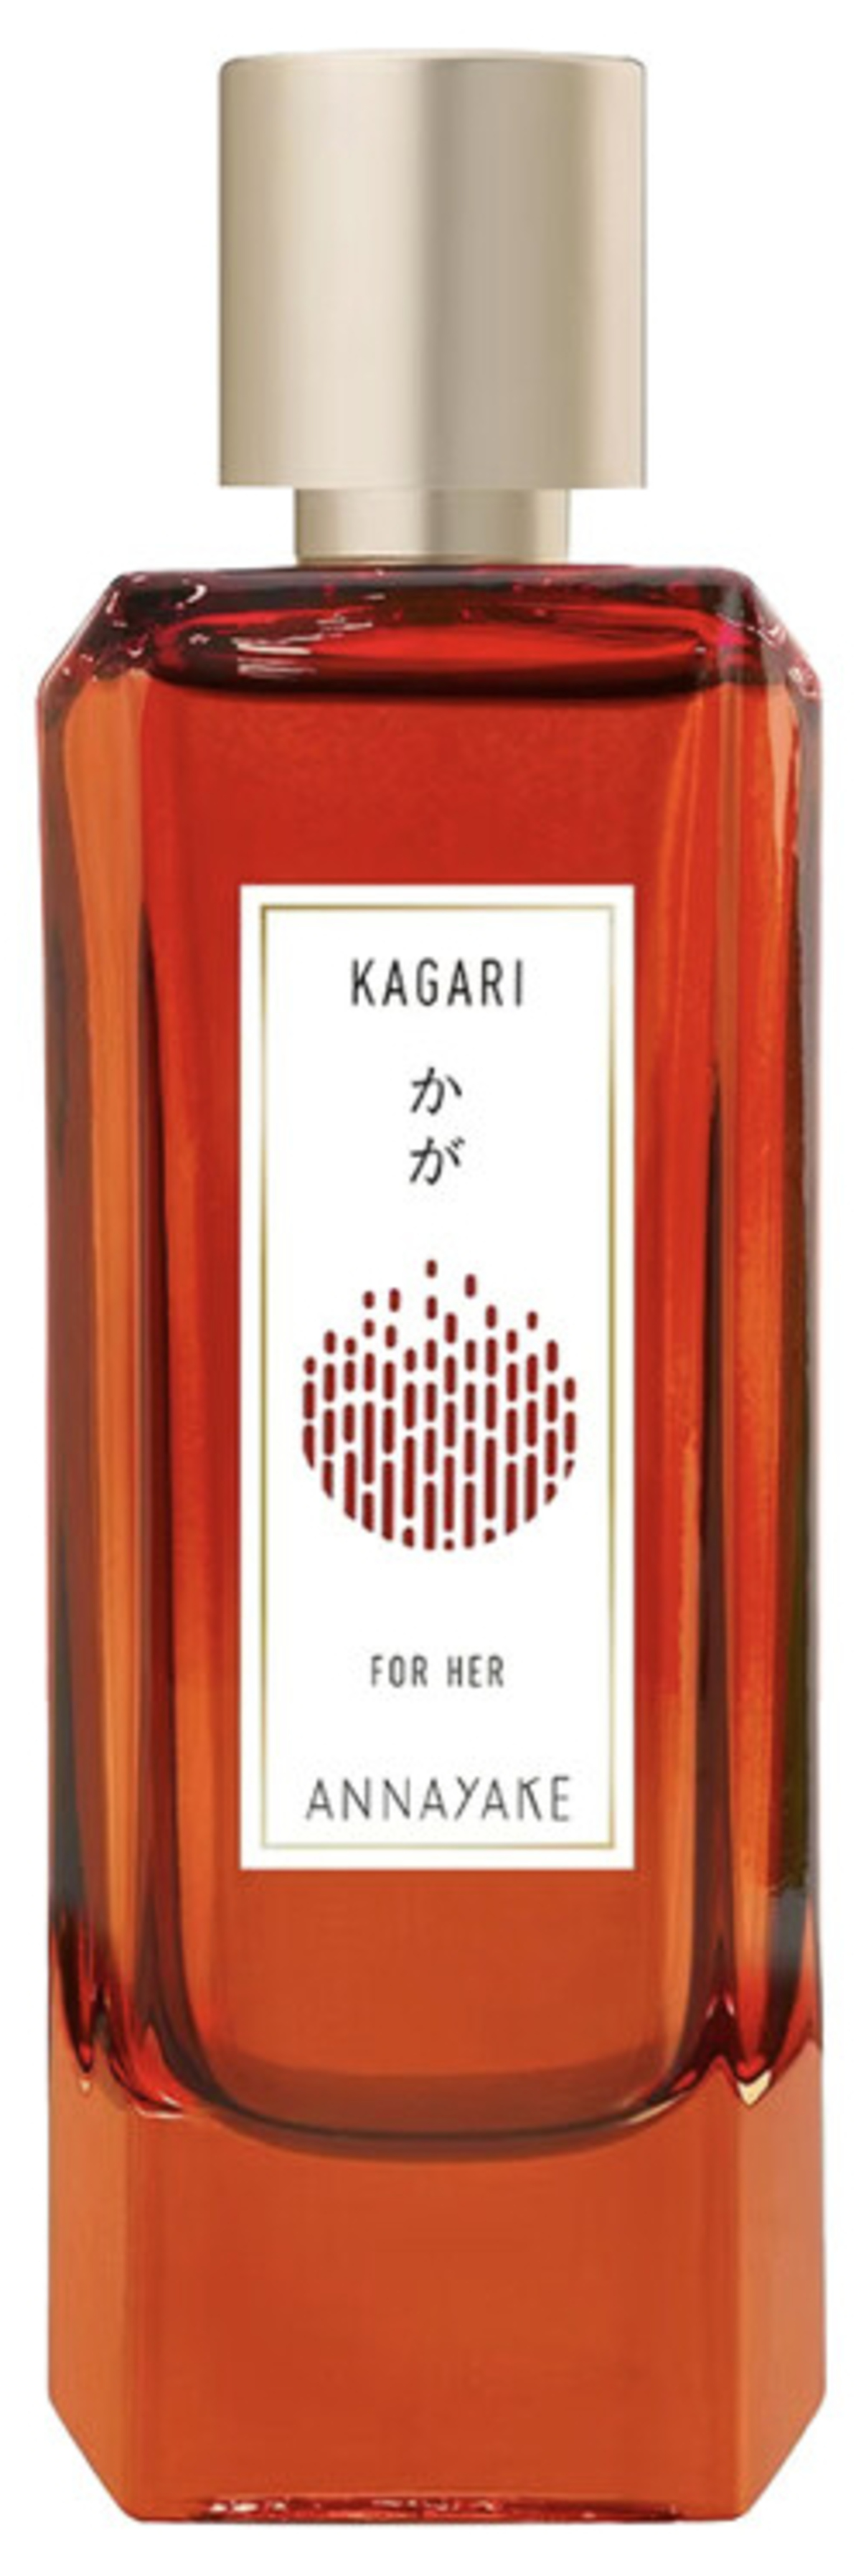 Kagari for Her (Annayake)